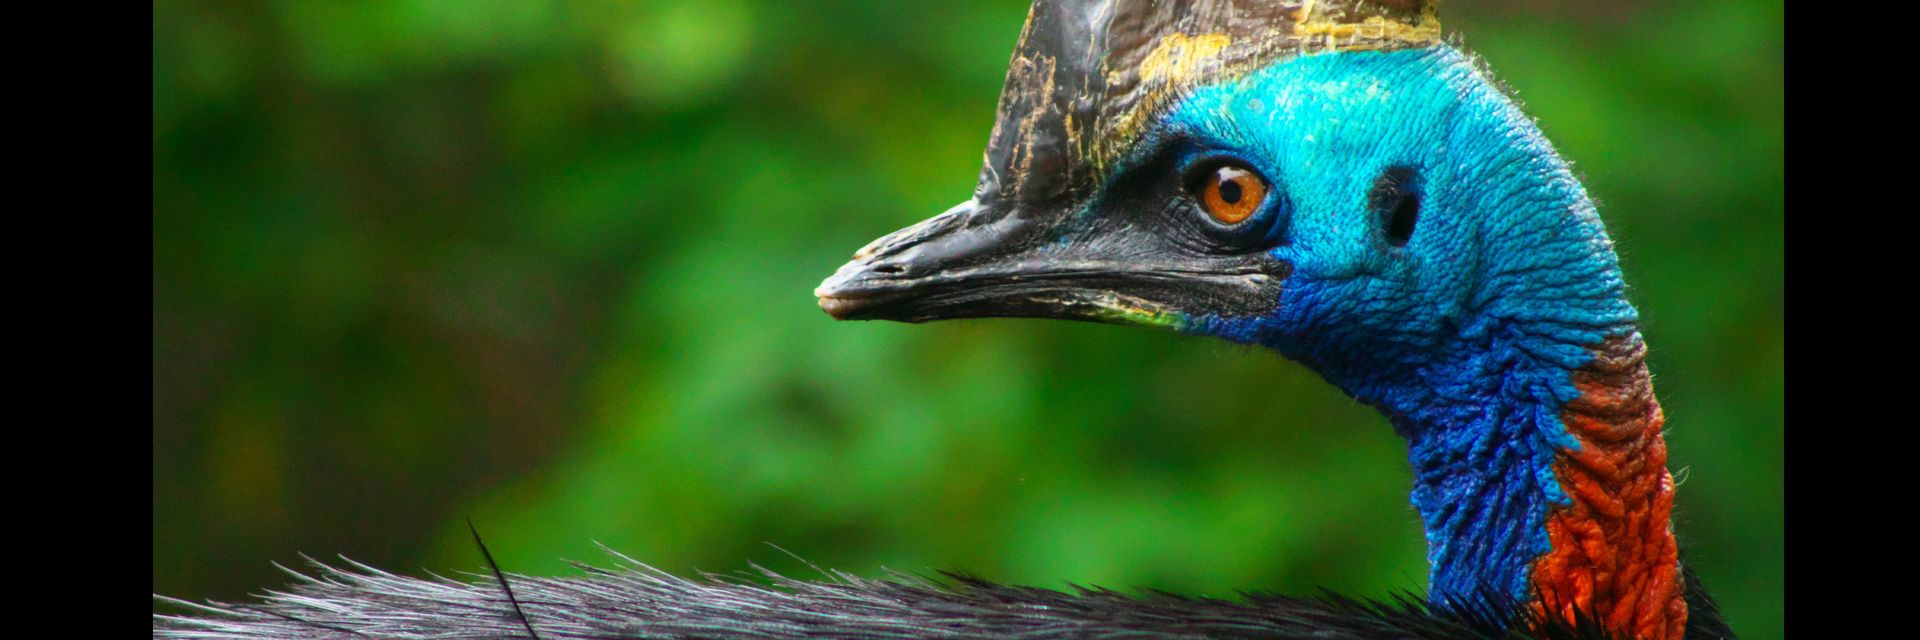 Dinosaurs to Cassowaries&#58; Adapting Avians Survive Mass Extinctions